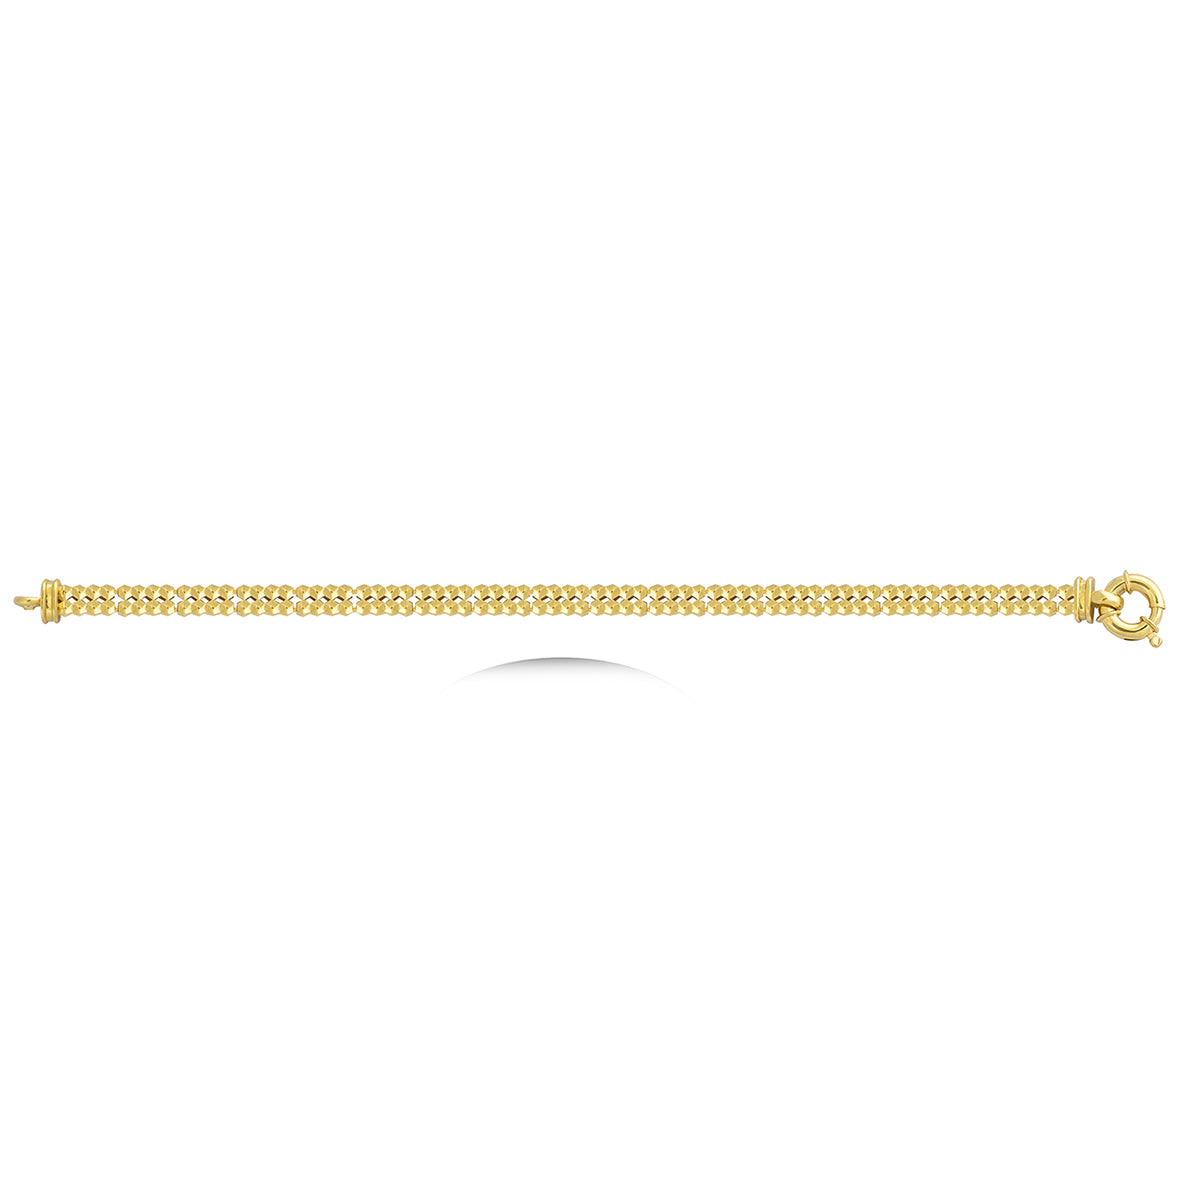 Chain Bracelet in 18k Yellow Gold